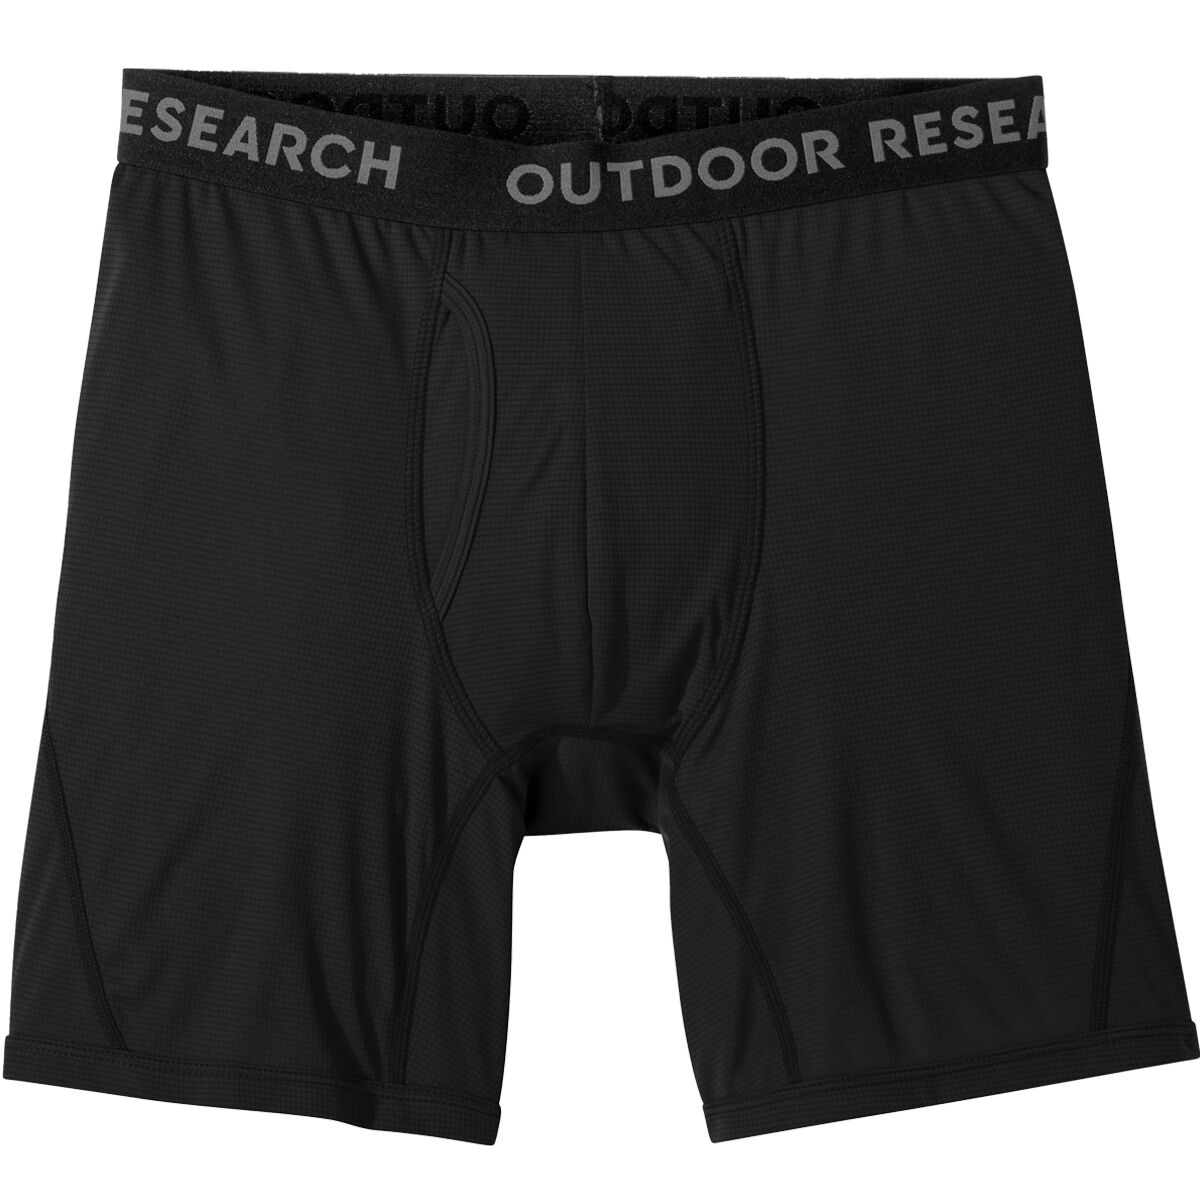 Outdoor Research Echo Boxer Briefs - Men's